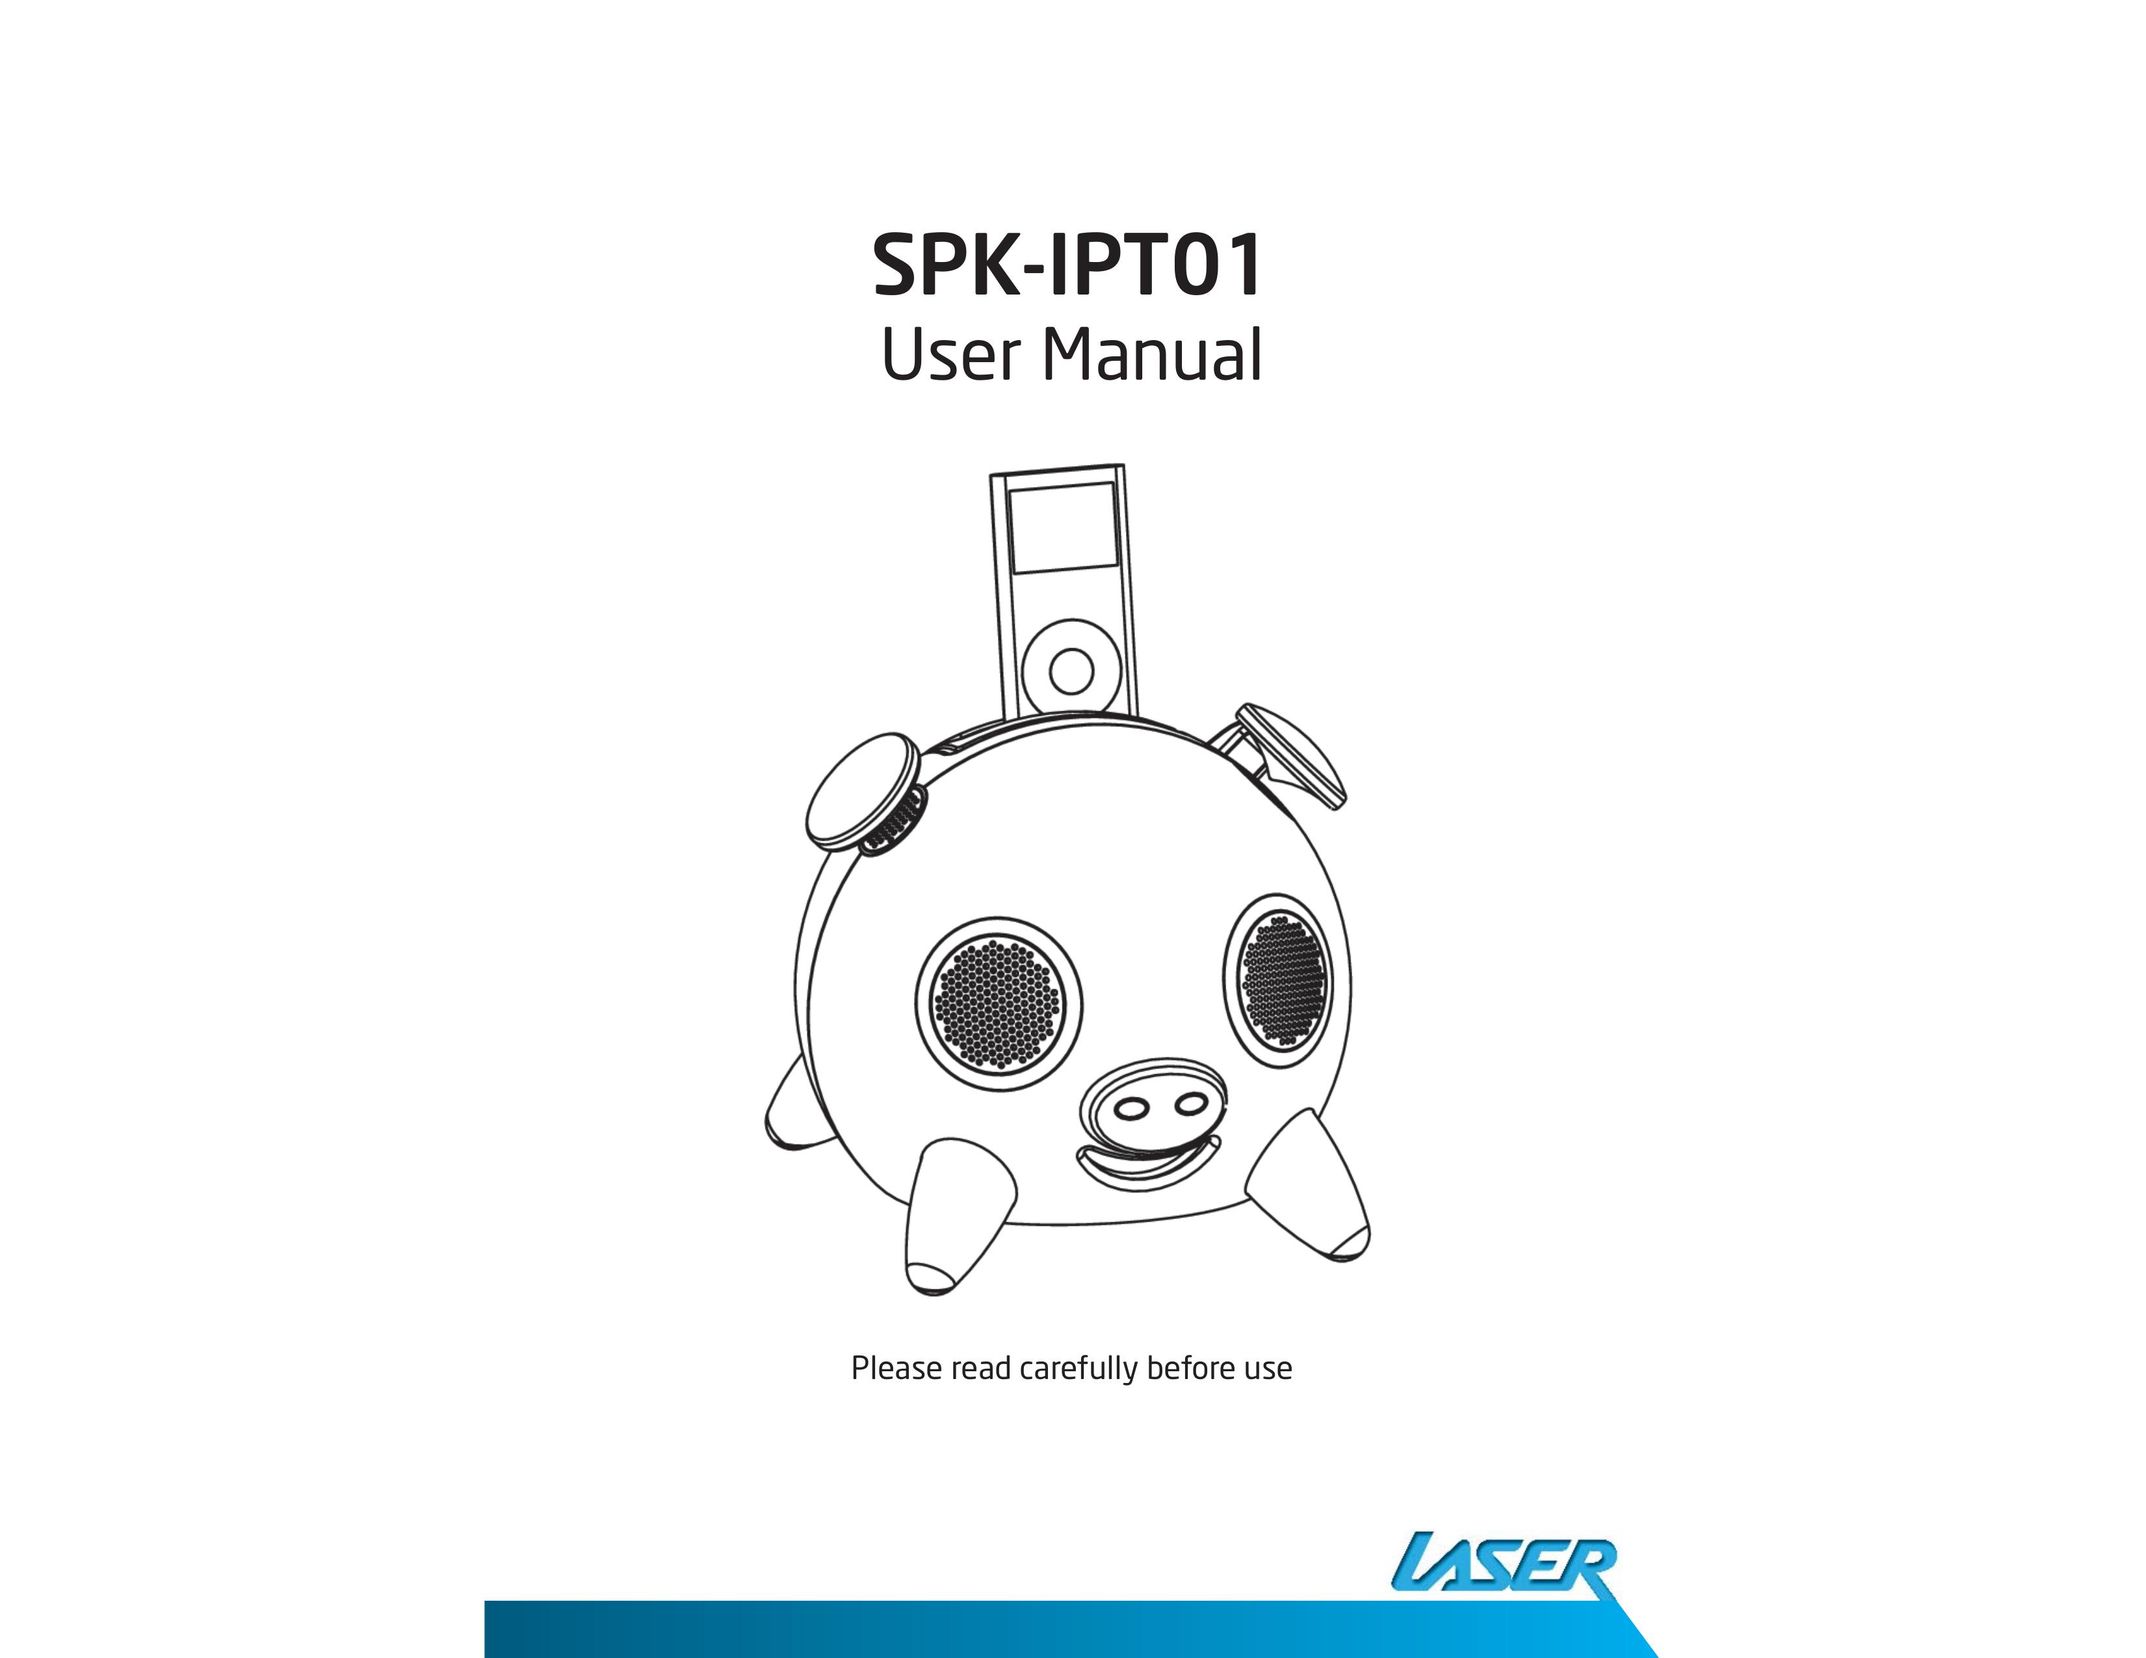 Laser SPK-IPT01 MP3 Docking Station User Manual